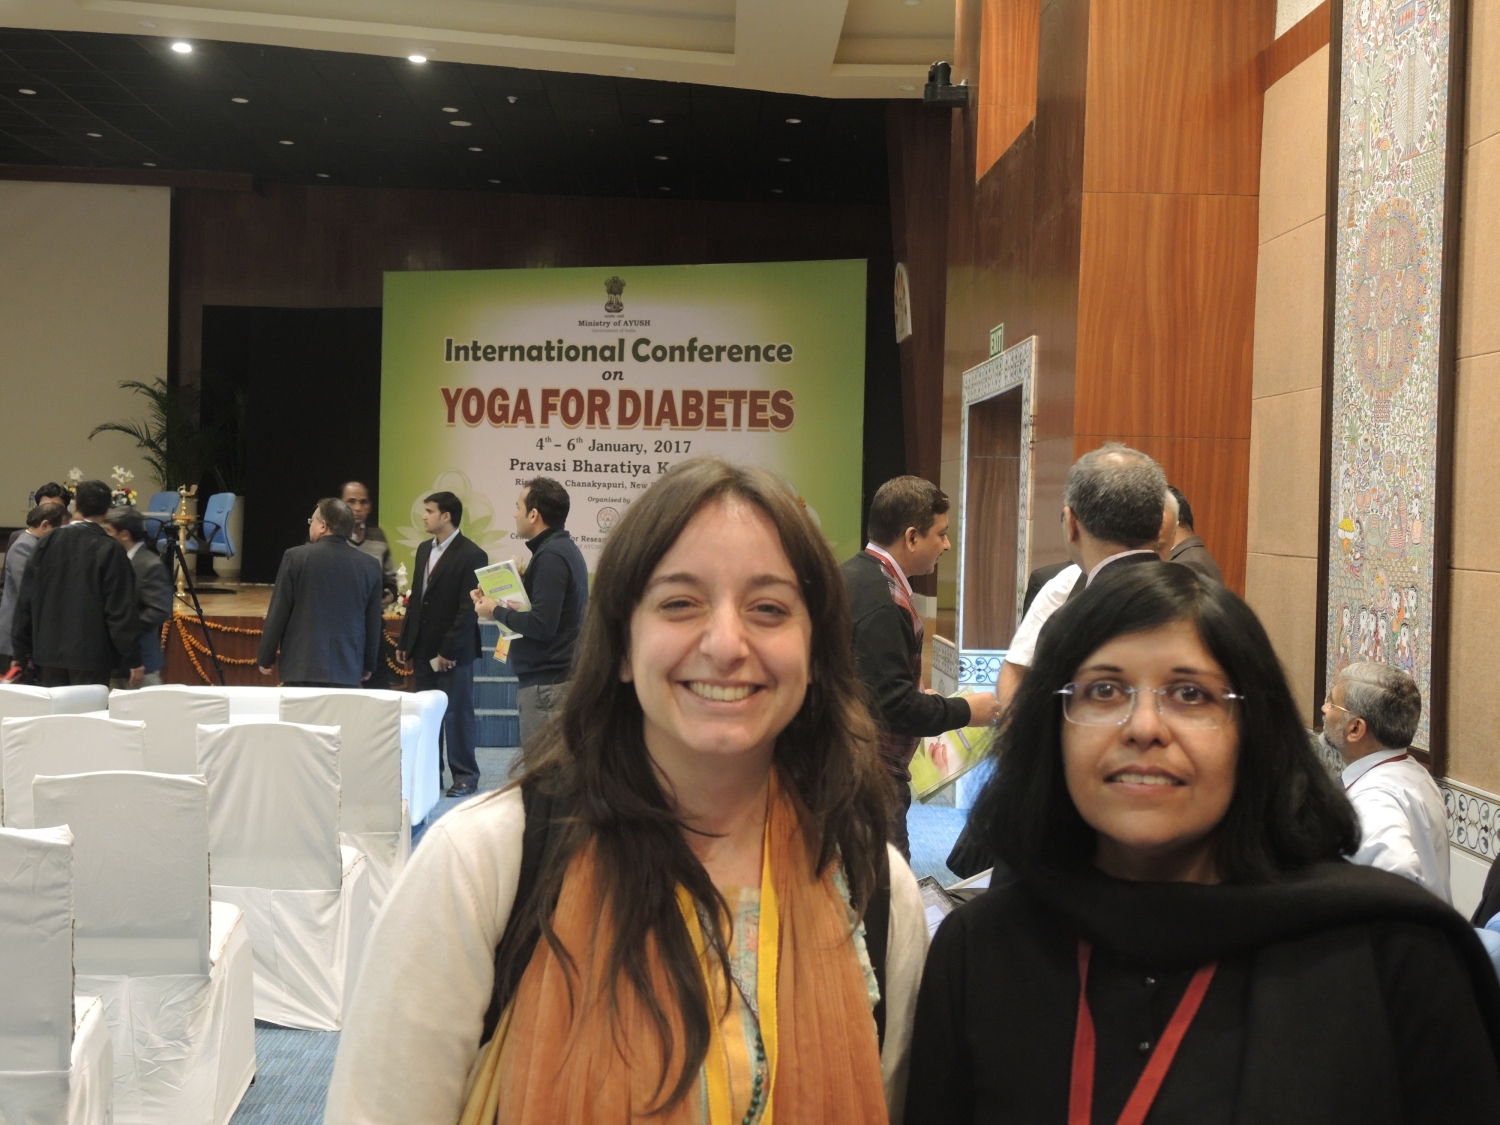 Dr. Shirley Telles, Director of Patañjali Yogapeeth, Haridvar, India